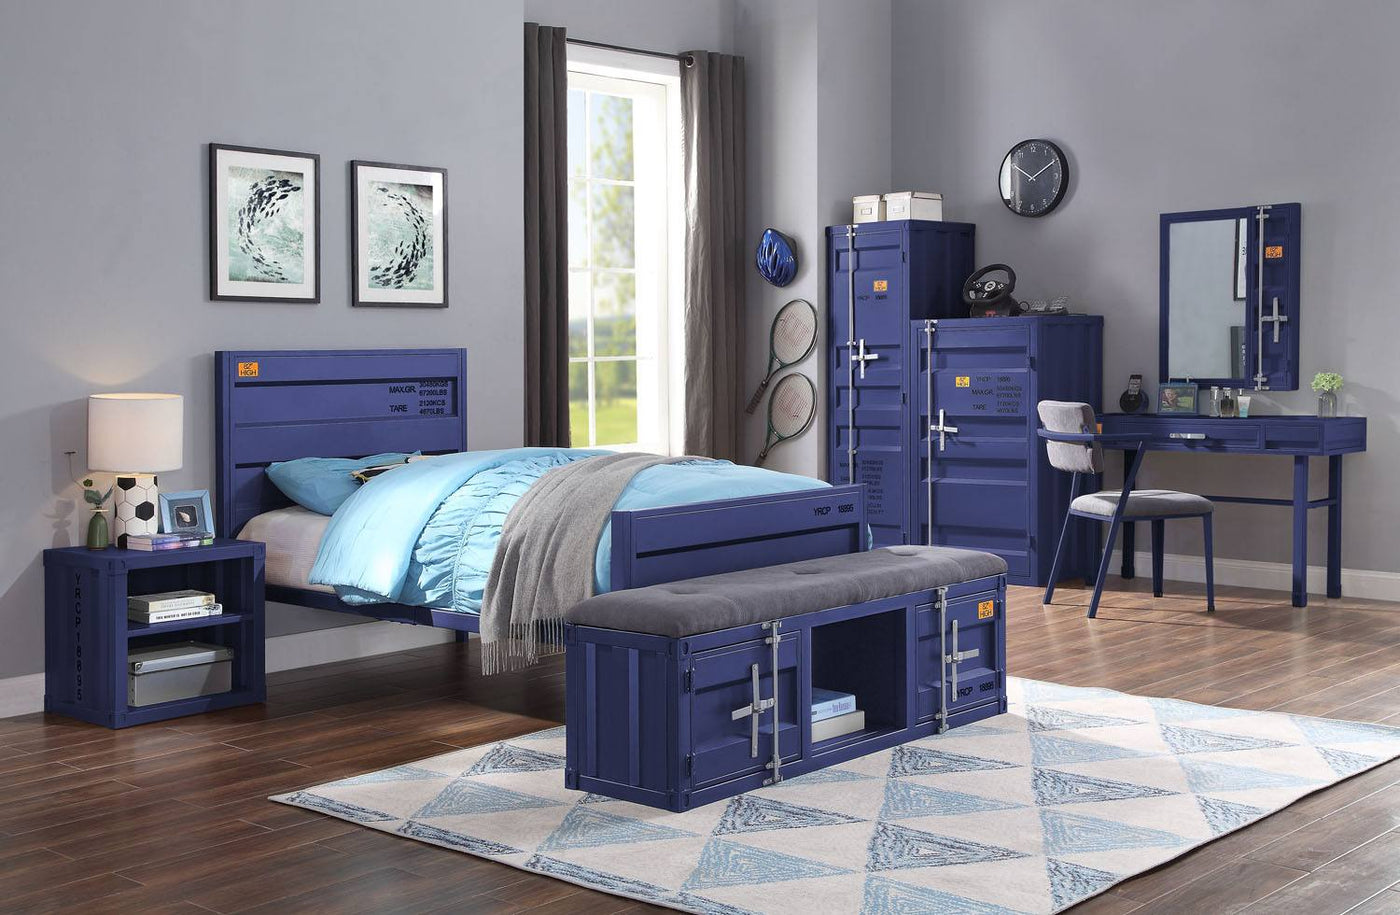 Konto Industrial Full Bed - Blue